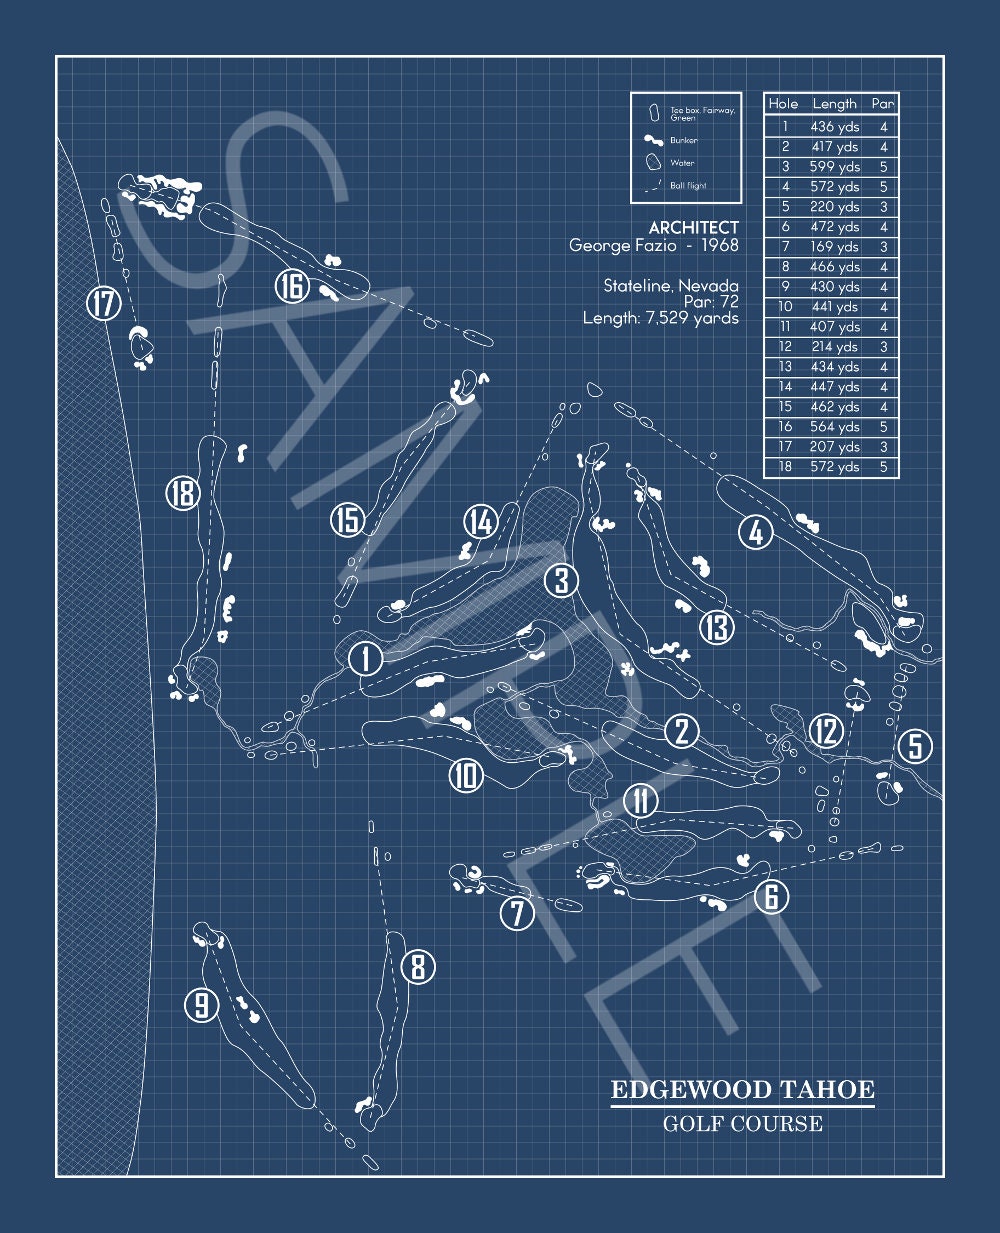 Edgewood Tahoe Golf Course Blueprint (Print)